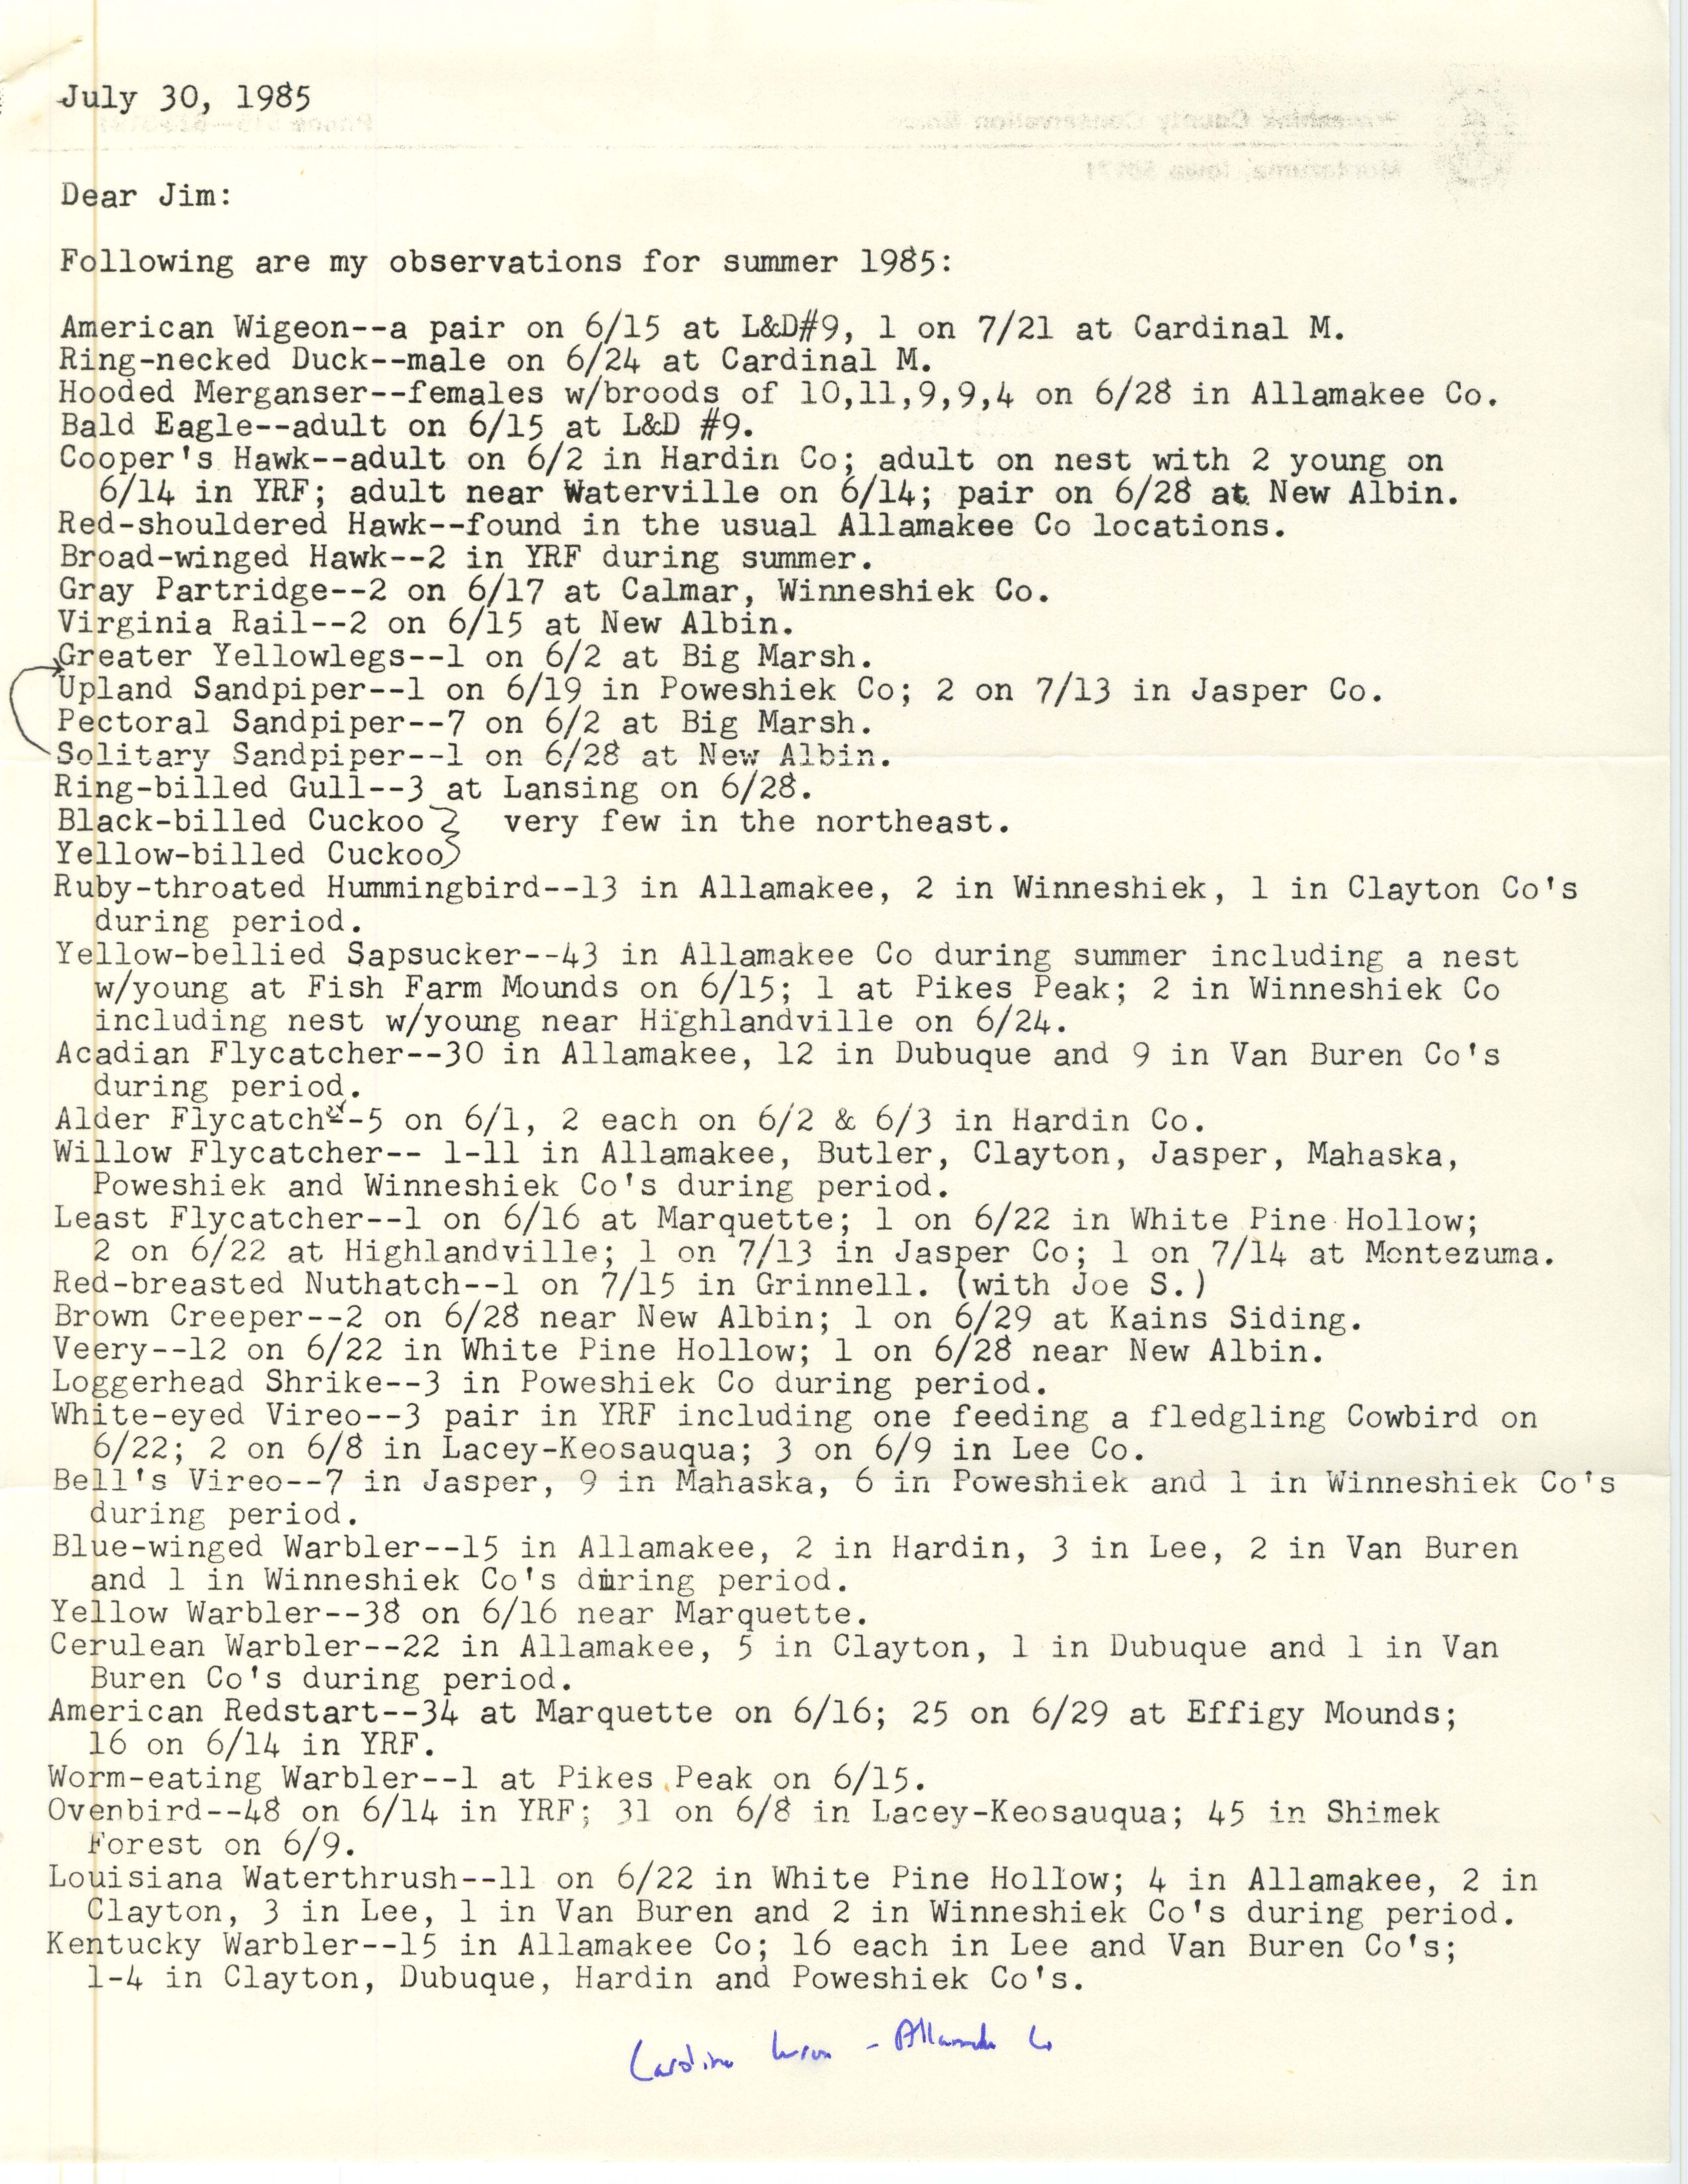 Darwin Koenig letter to James J. Dinsmore regarding bird sightings, July 30, 1985